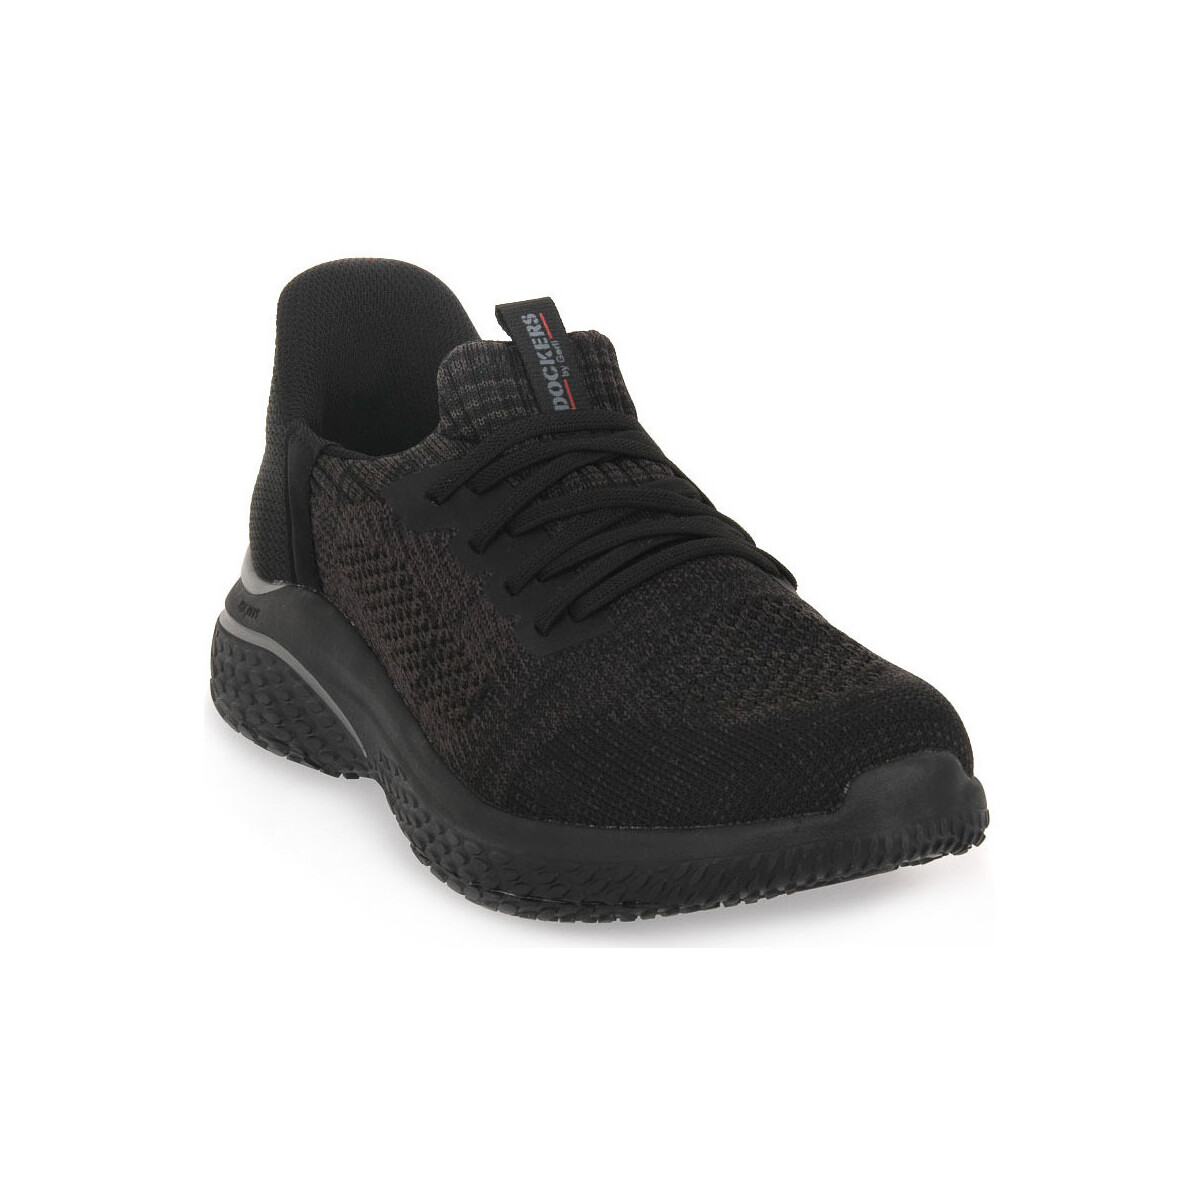 Pantofi Bărbați Sneakers Dockers 101 ALL BLK Negru